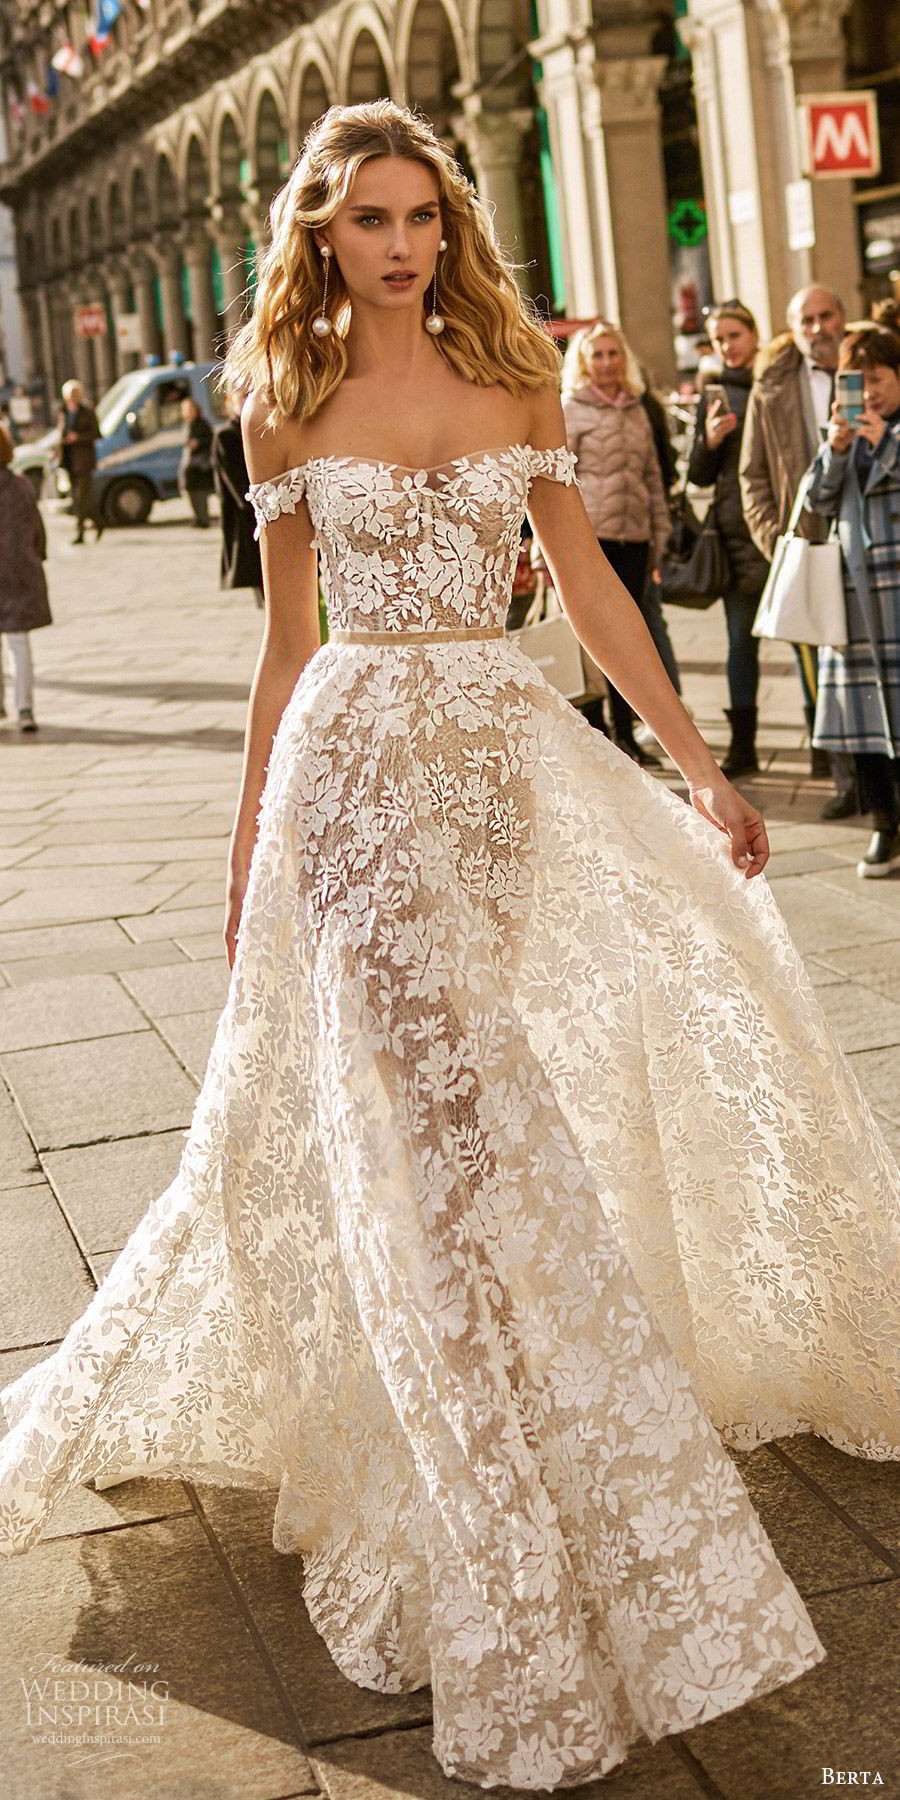 Berta Wedding Dresses Prices
 Berta Spring 2020 Wedding Dresses — “Milano” Bridal